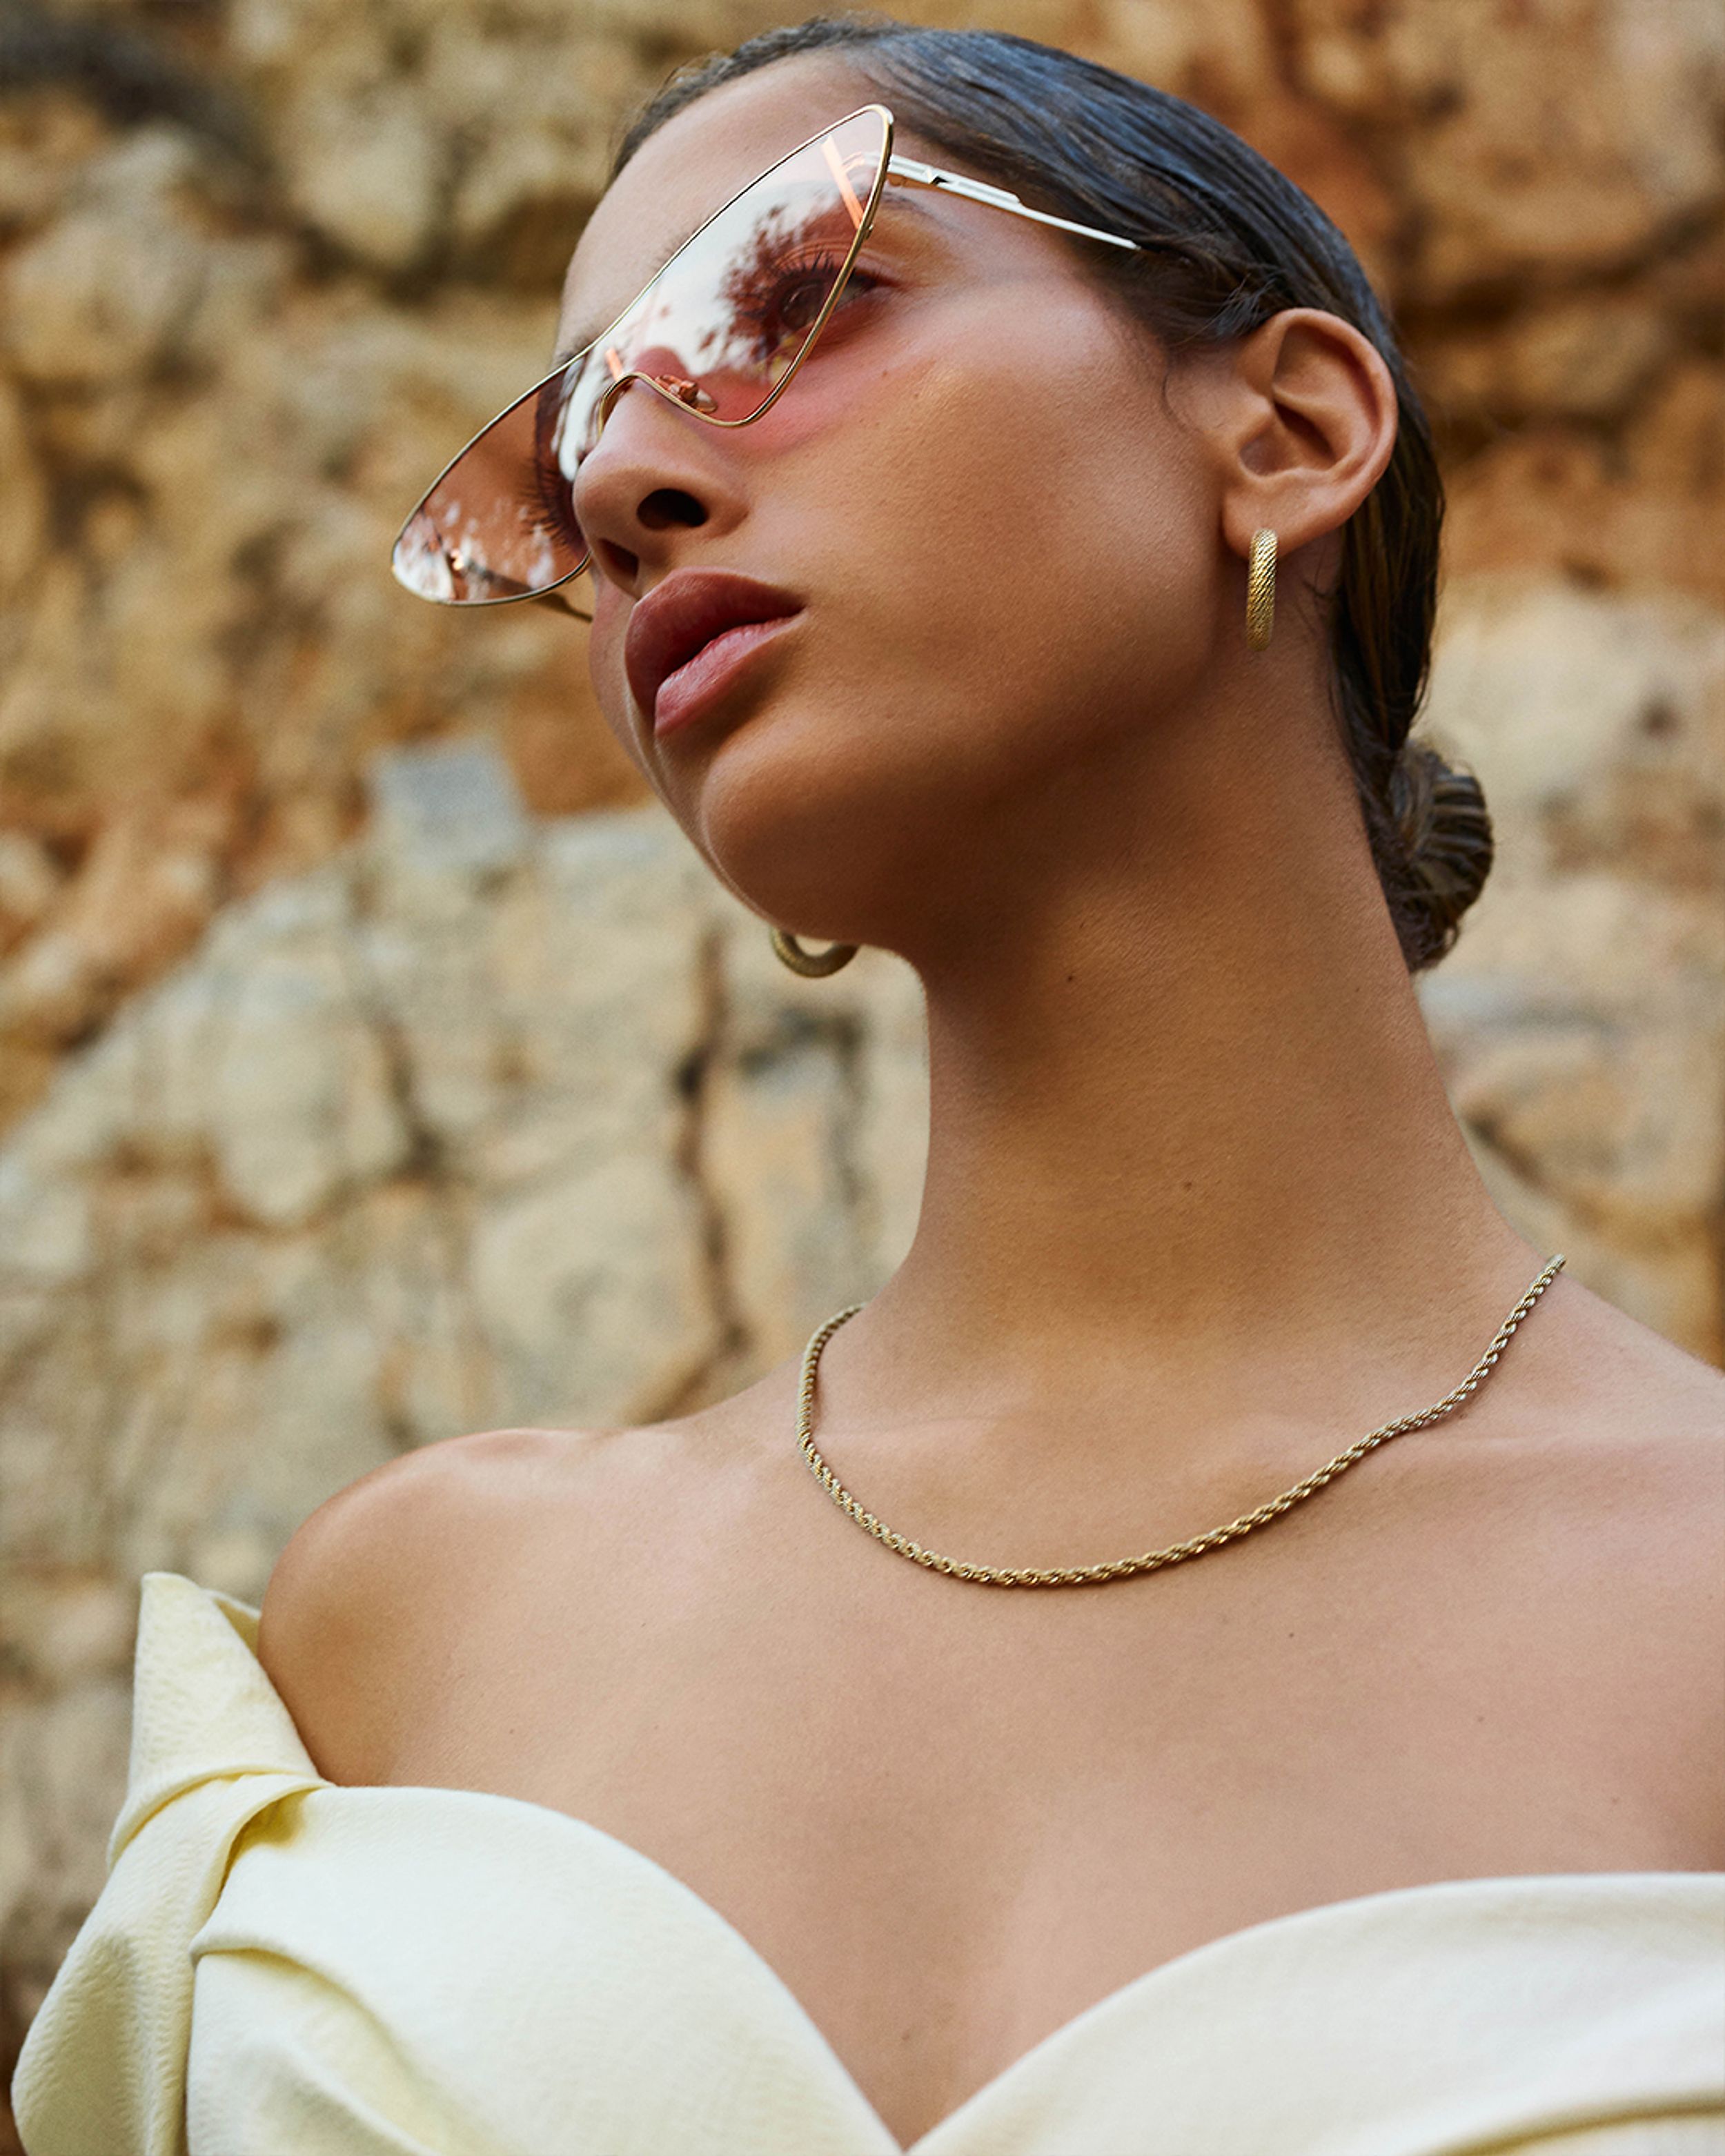 Yasmin Wijnaldum gazing to the side wearing a cream dress, sunglasses and gold chain